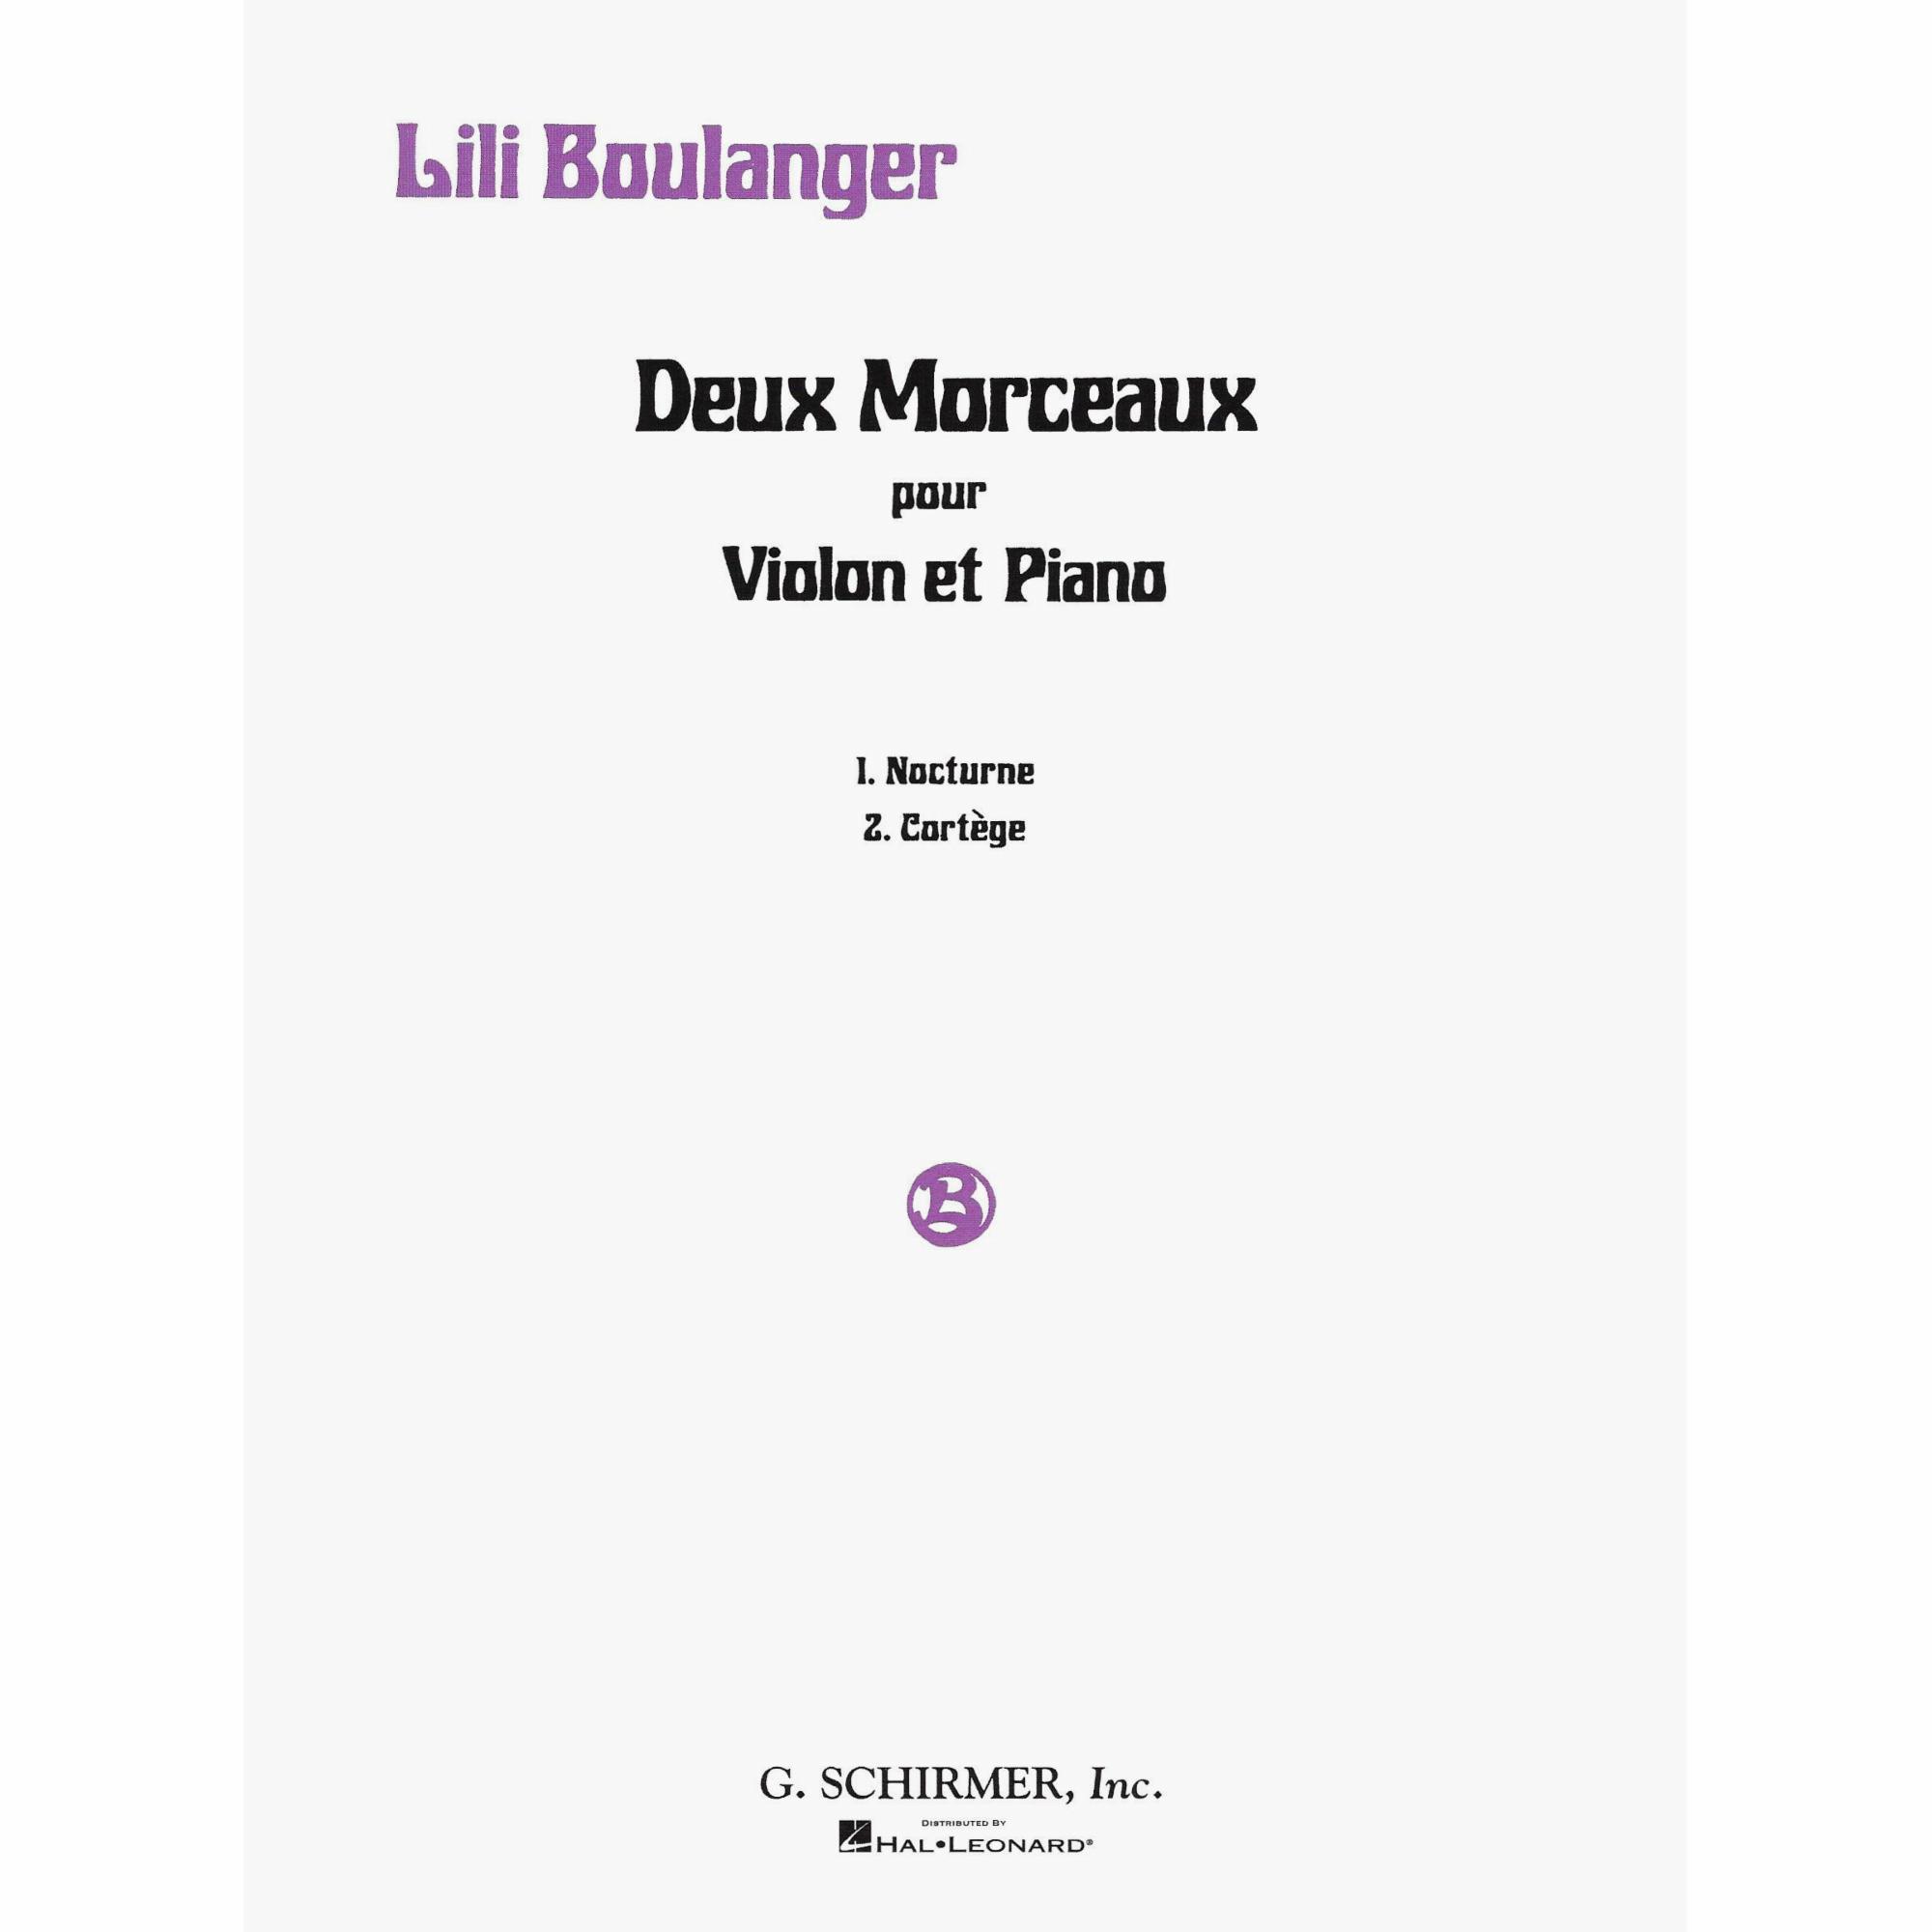 Boulanger -- Deux Morceaux for Violin and Piano